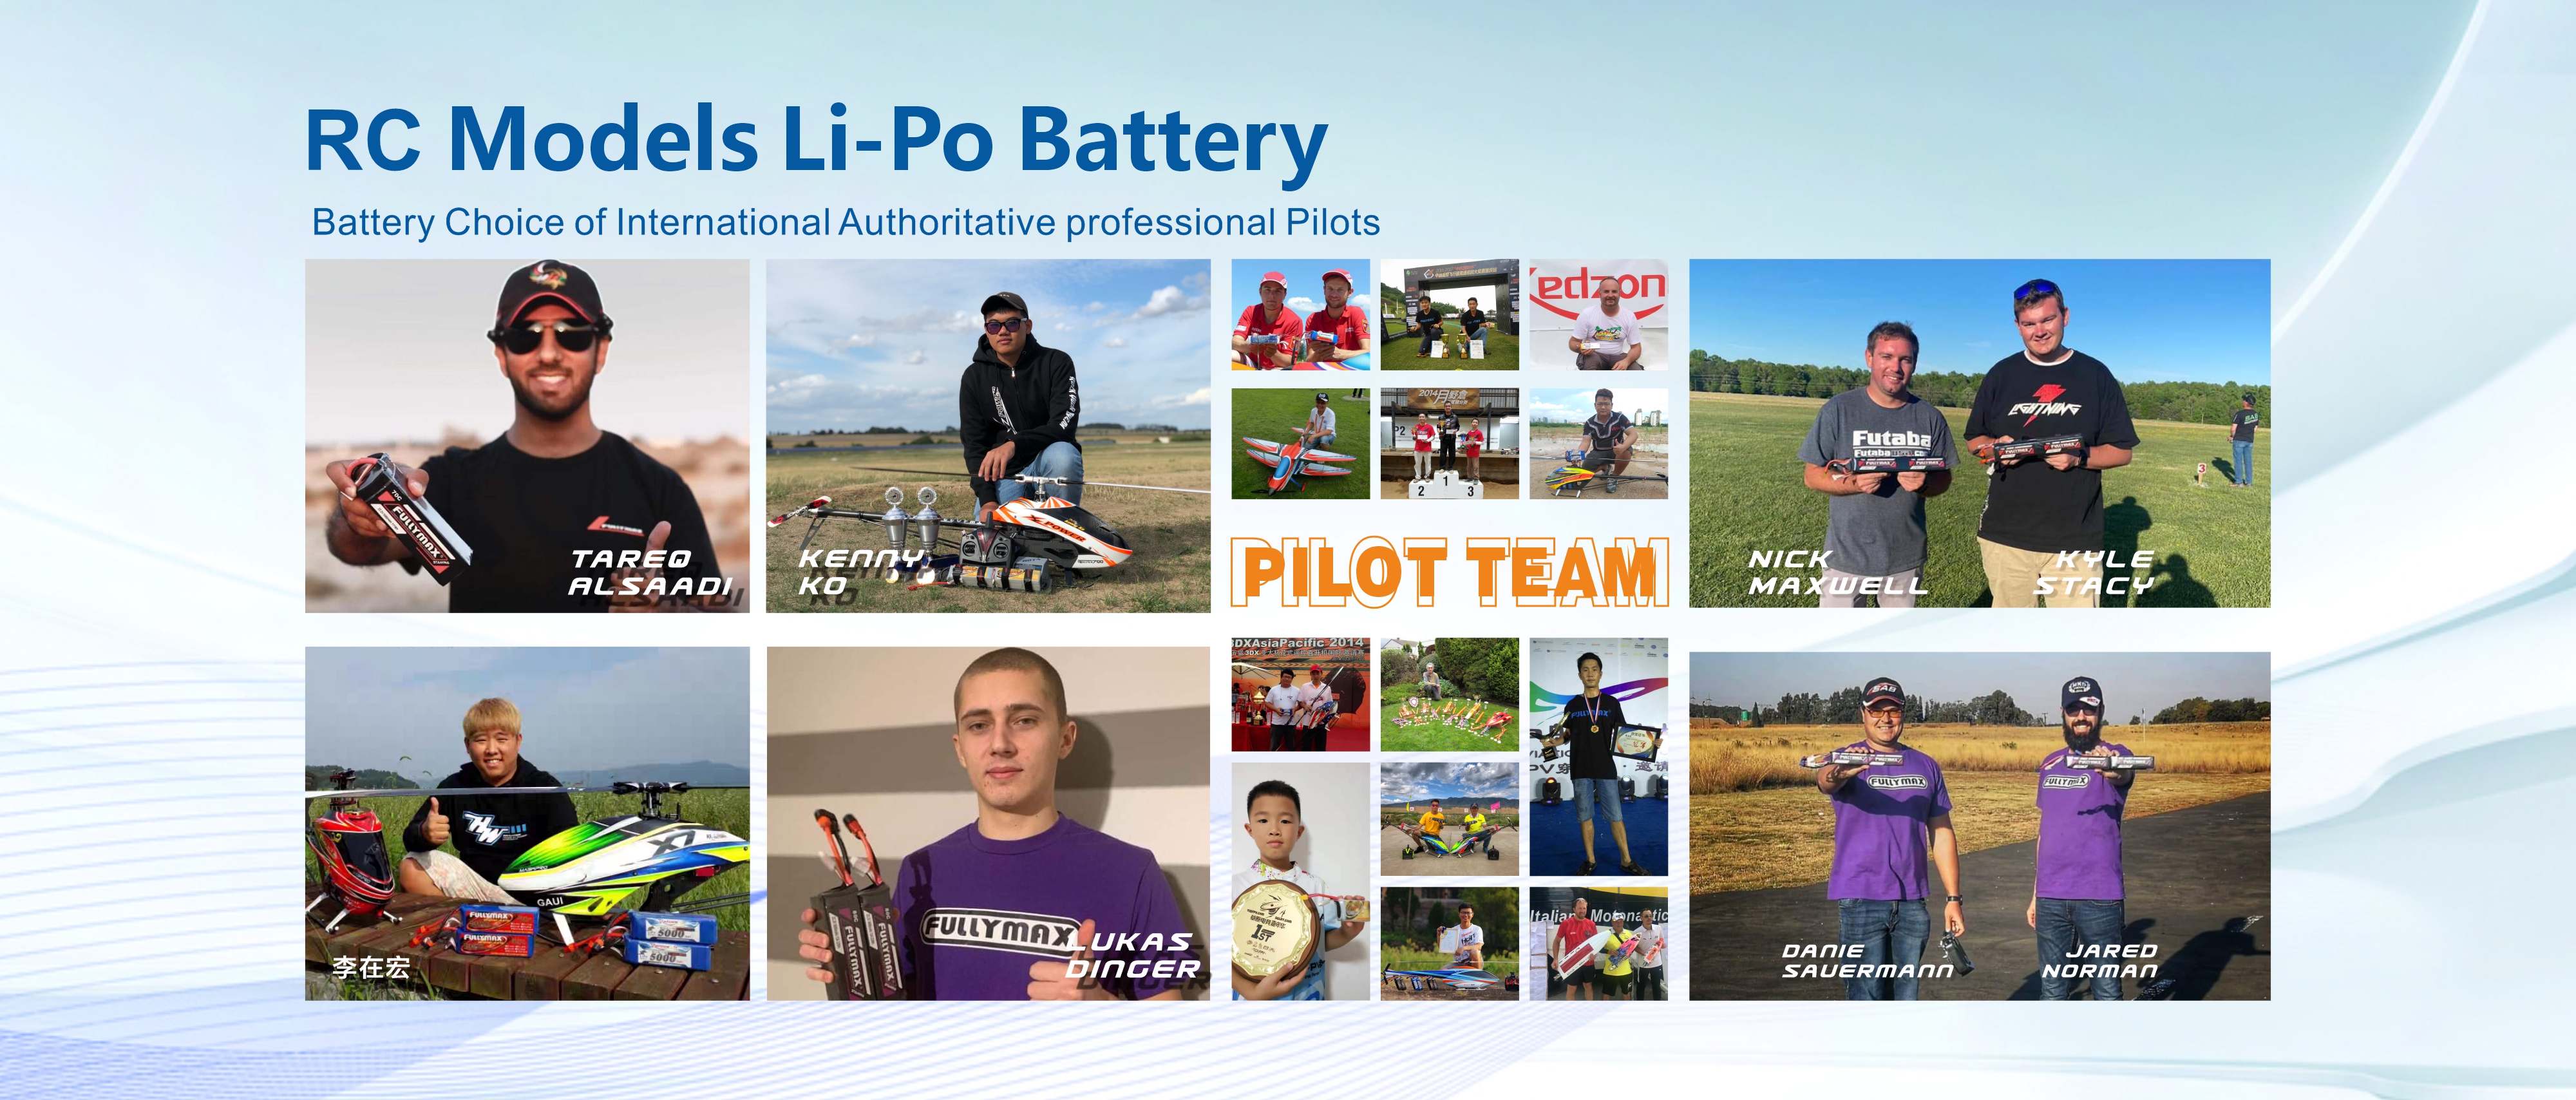 Battery Choice of International Authoritative professional Pilots